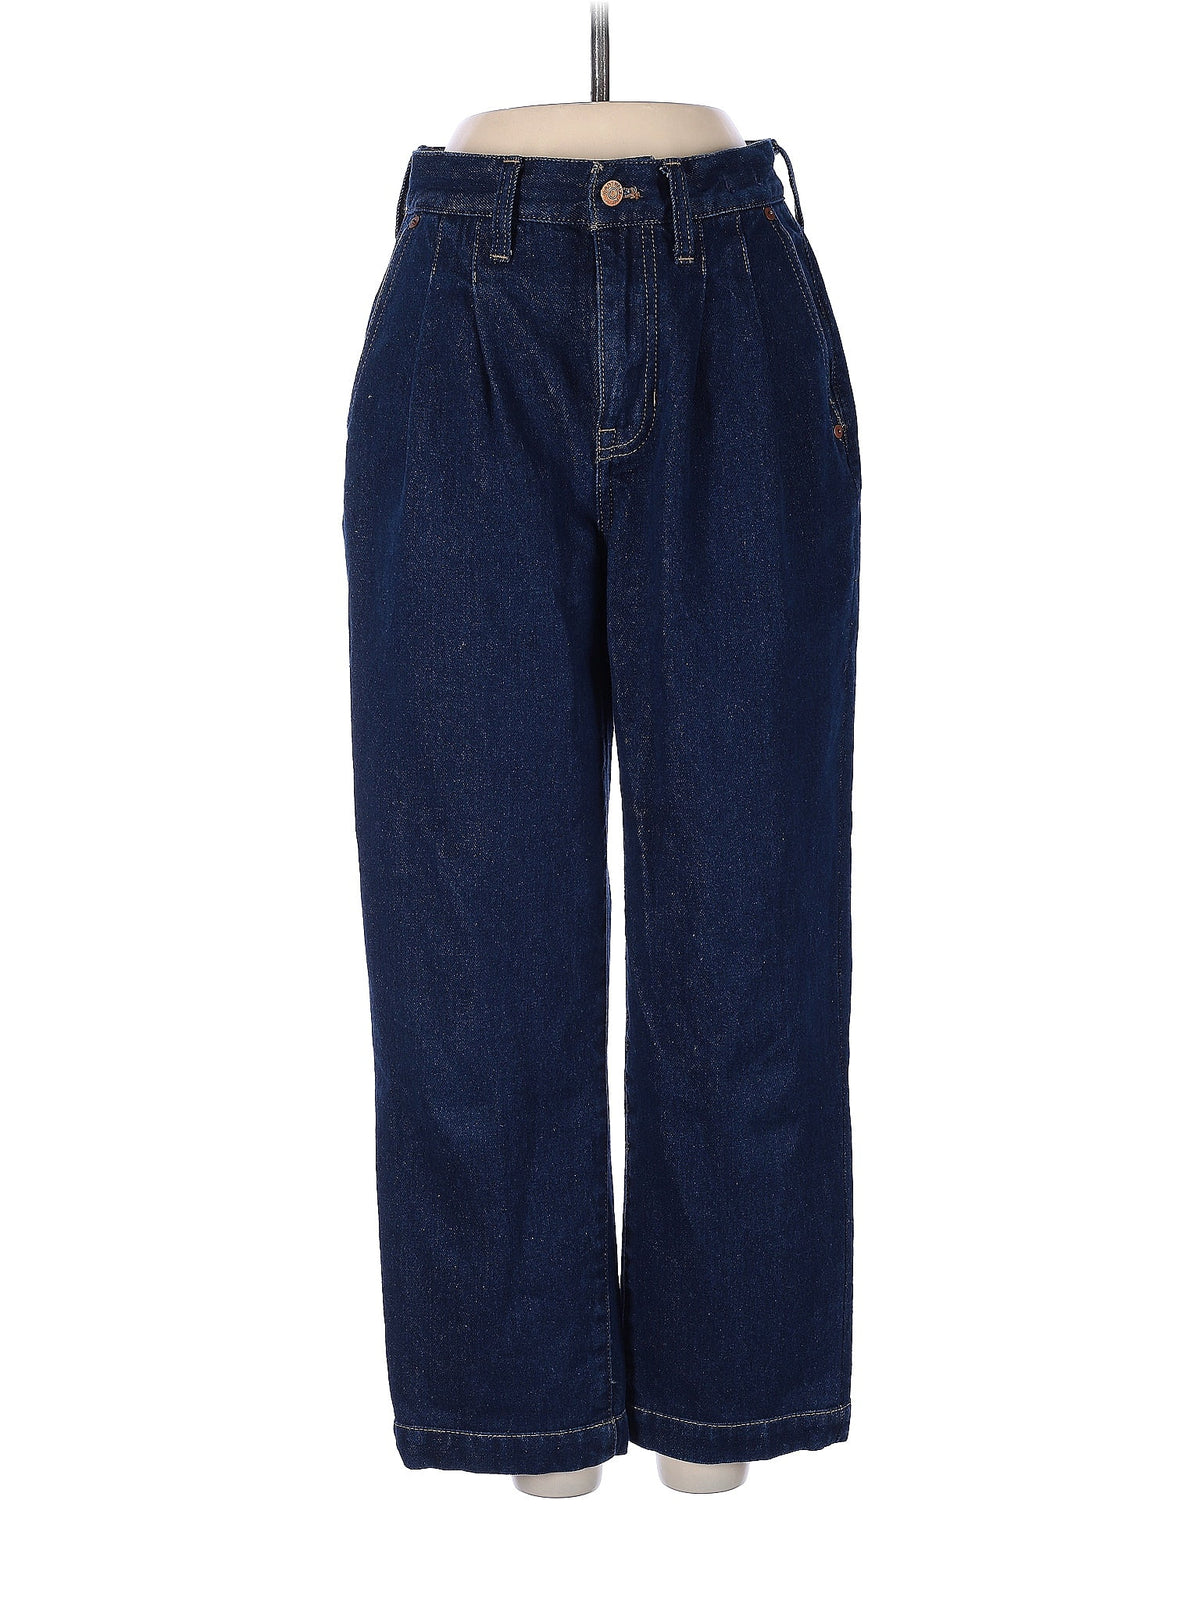 Low-Rise Wide-leg Jeans in Dark Wash waist size - 23